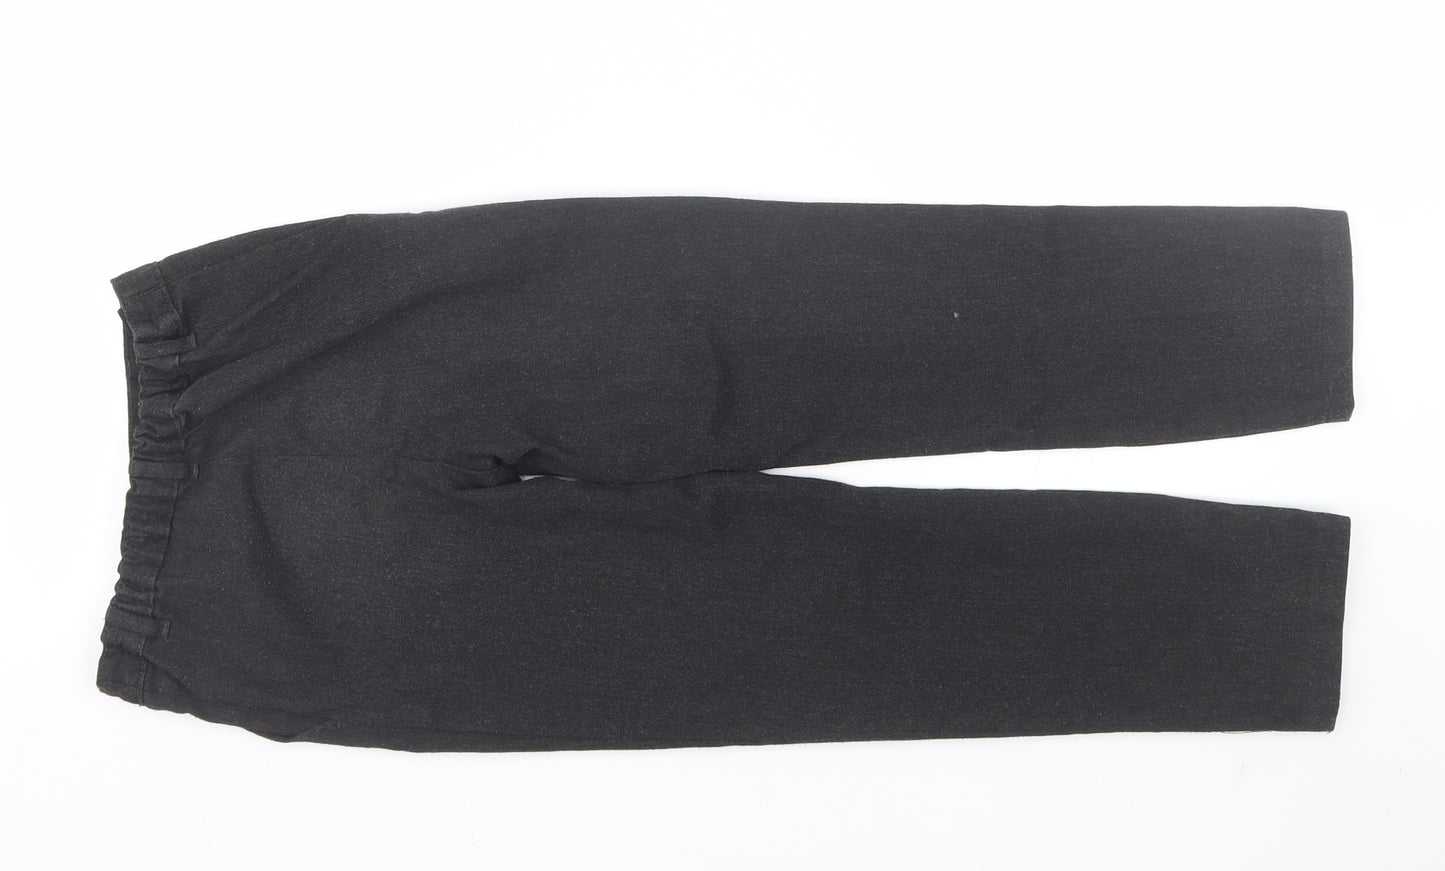 George Boys Black   Dress Pants Trousers Size 8-9 Years - School uniform